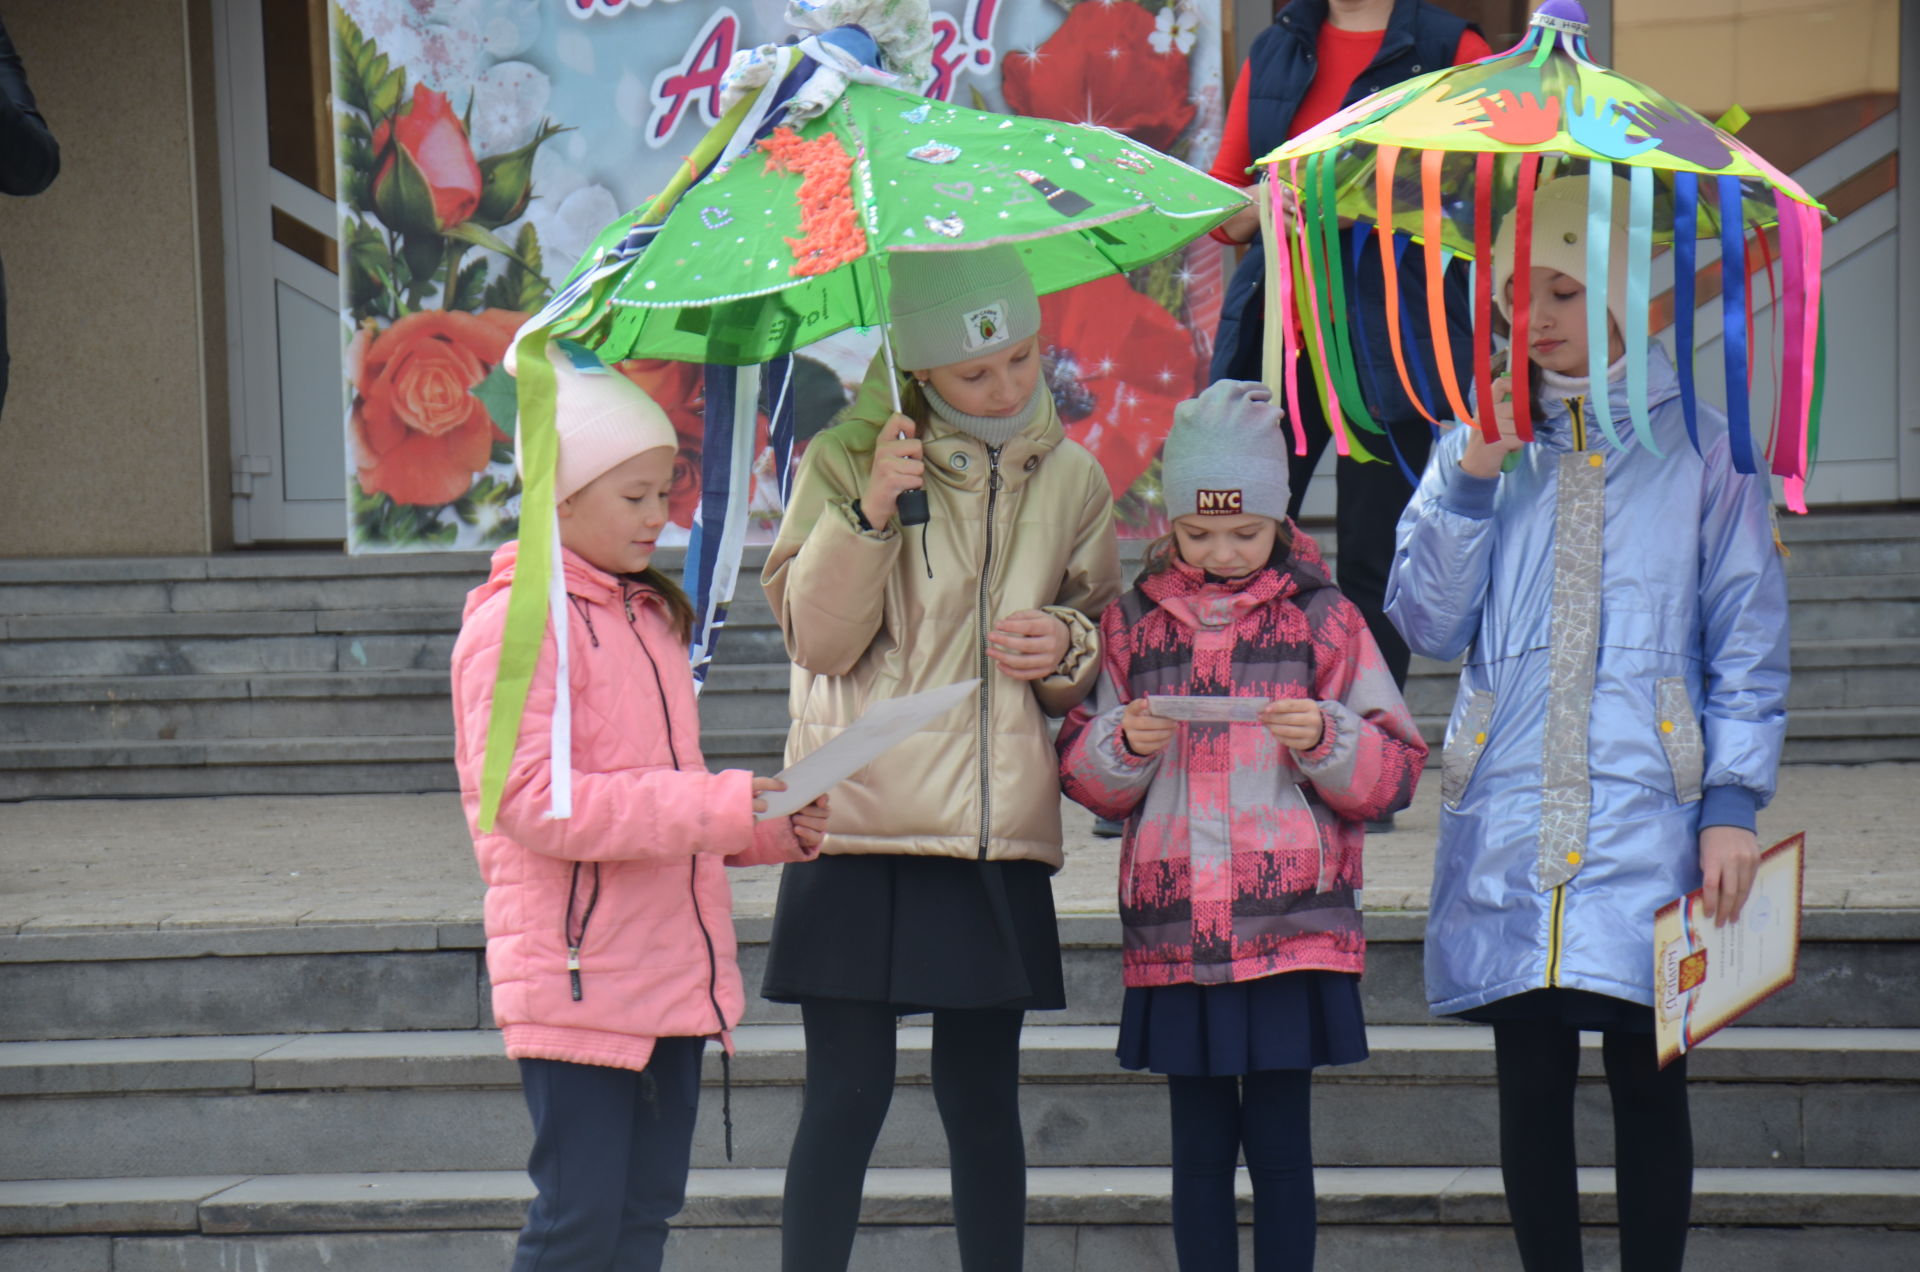 "Зонтиклар парады" - 2021